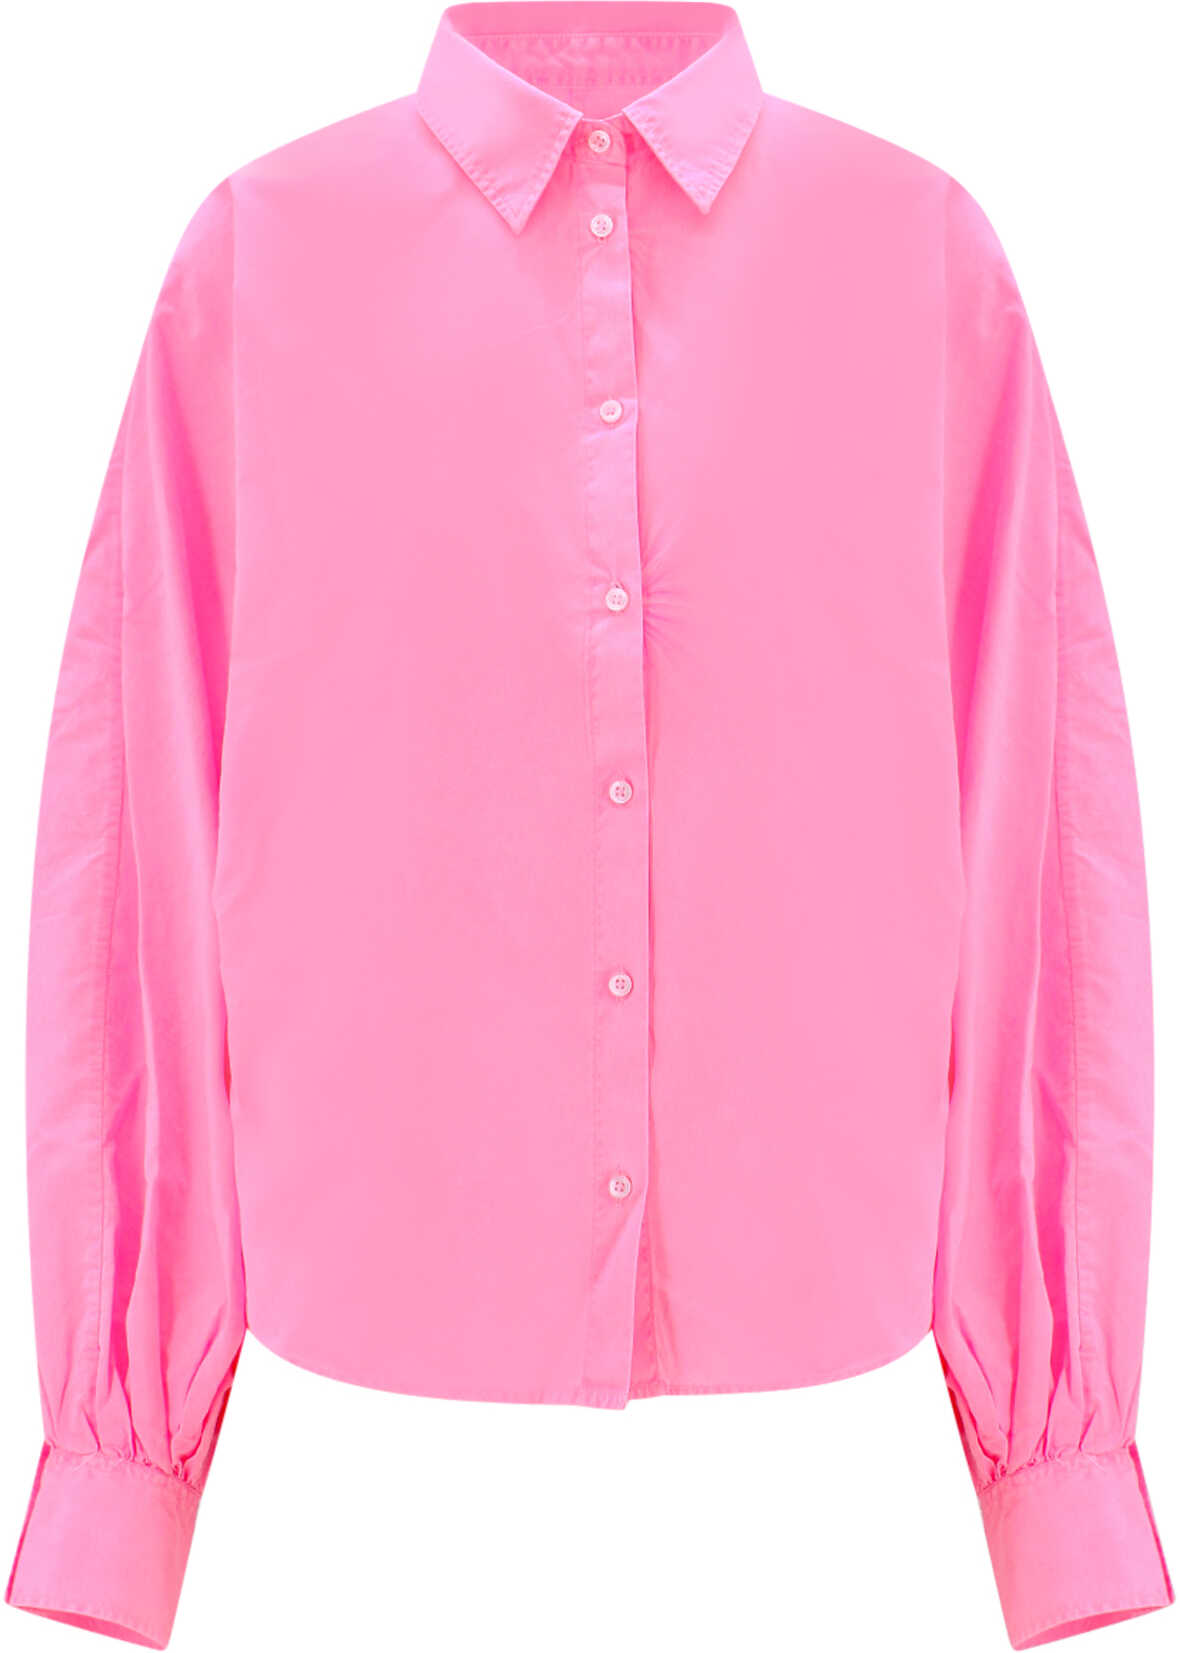 MADE IN TOMBOY Shirt Pink